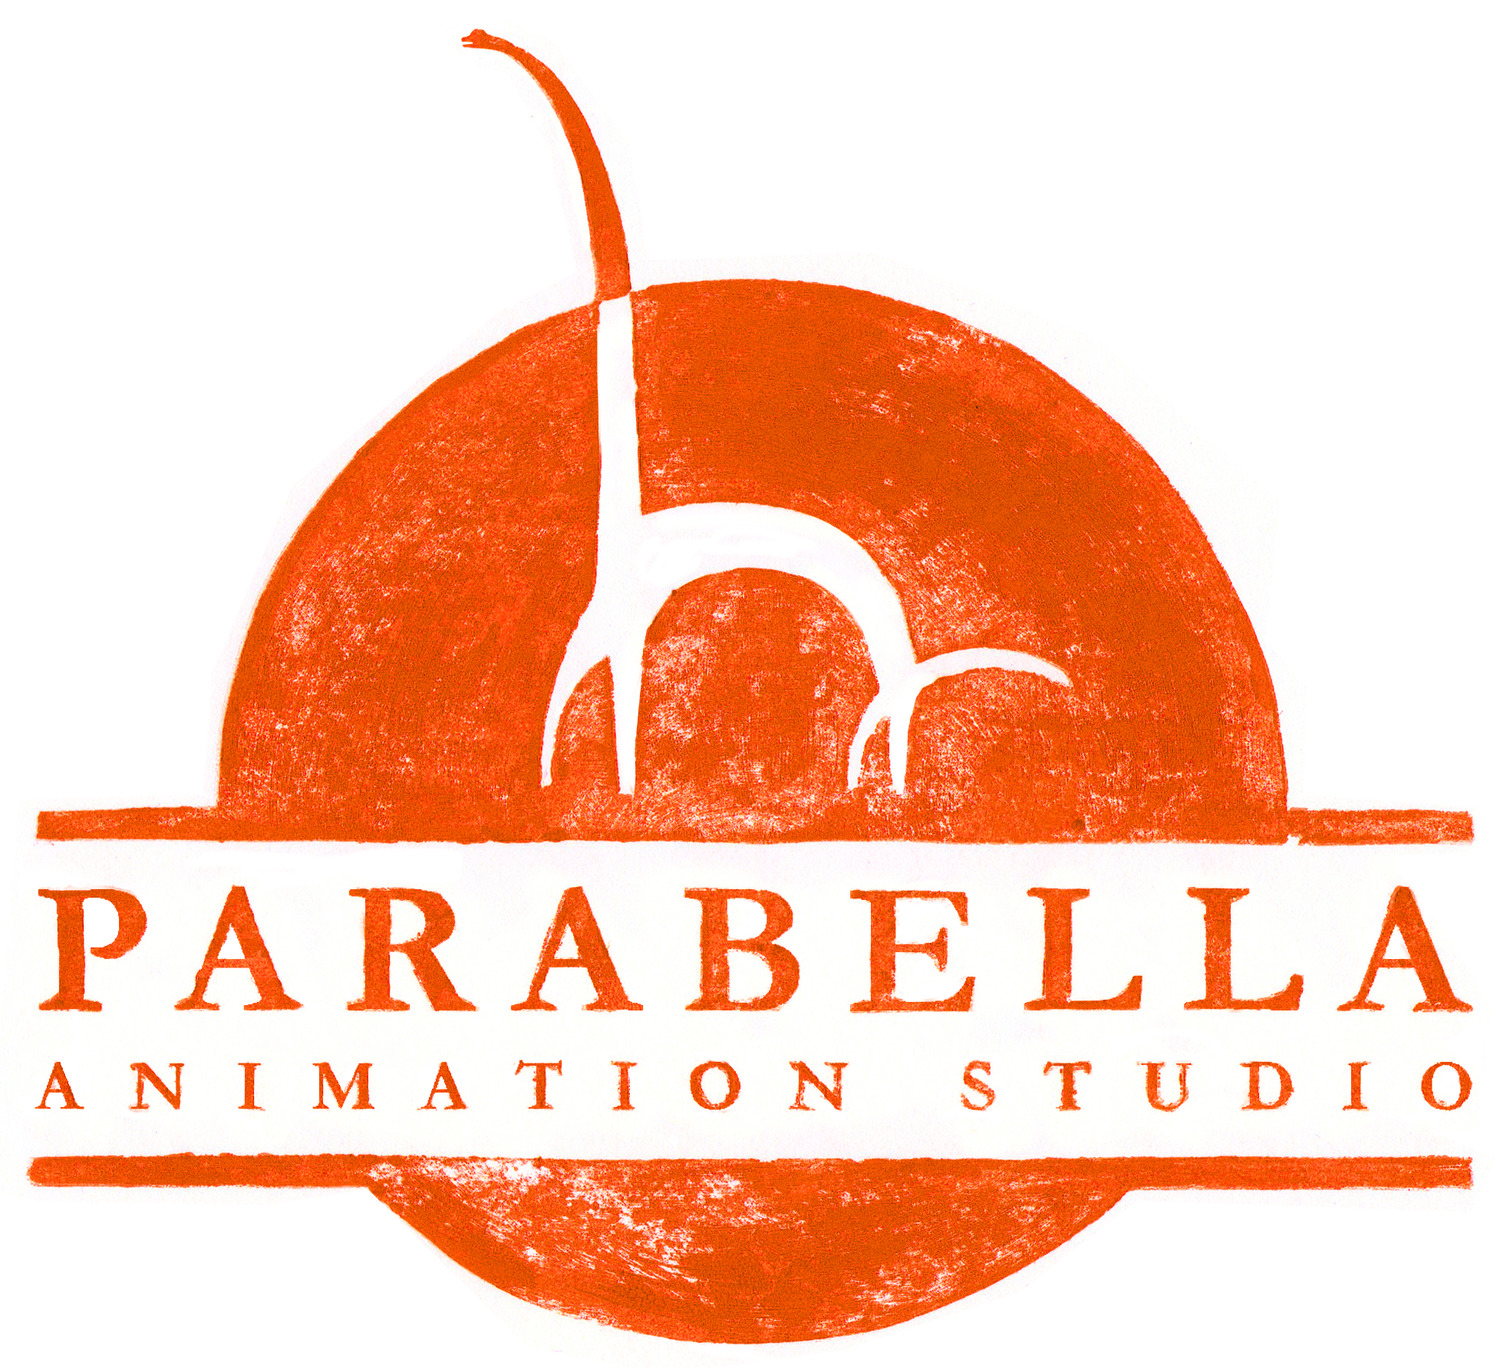 PARABELLA ANIMATION STUDIO